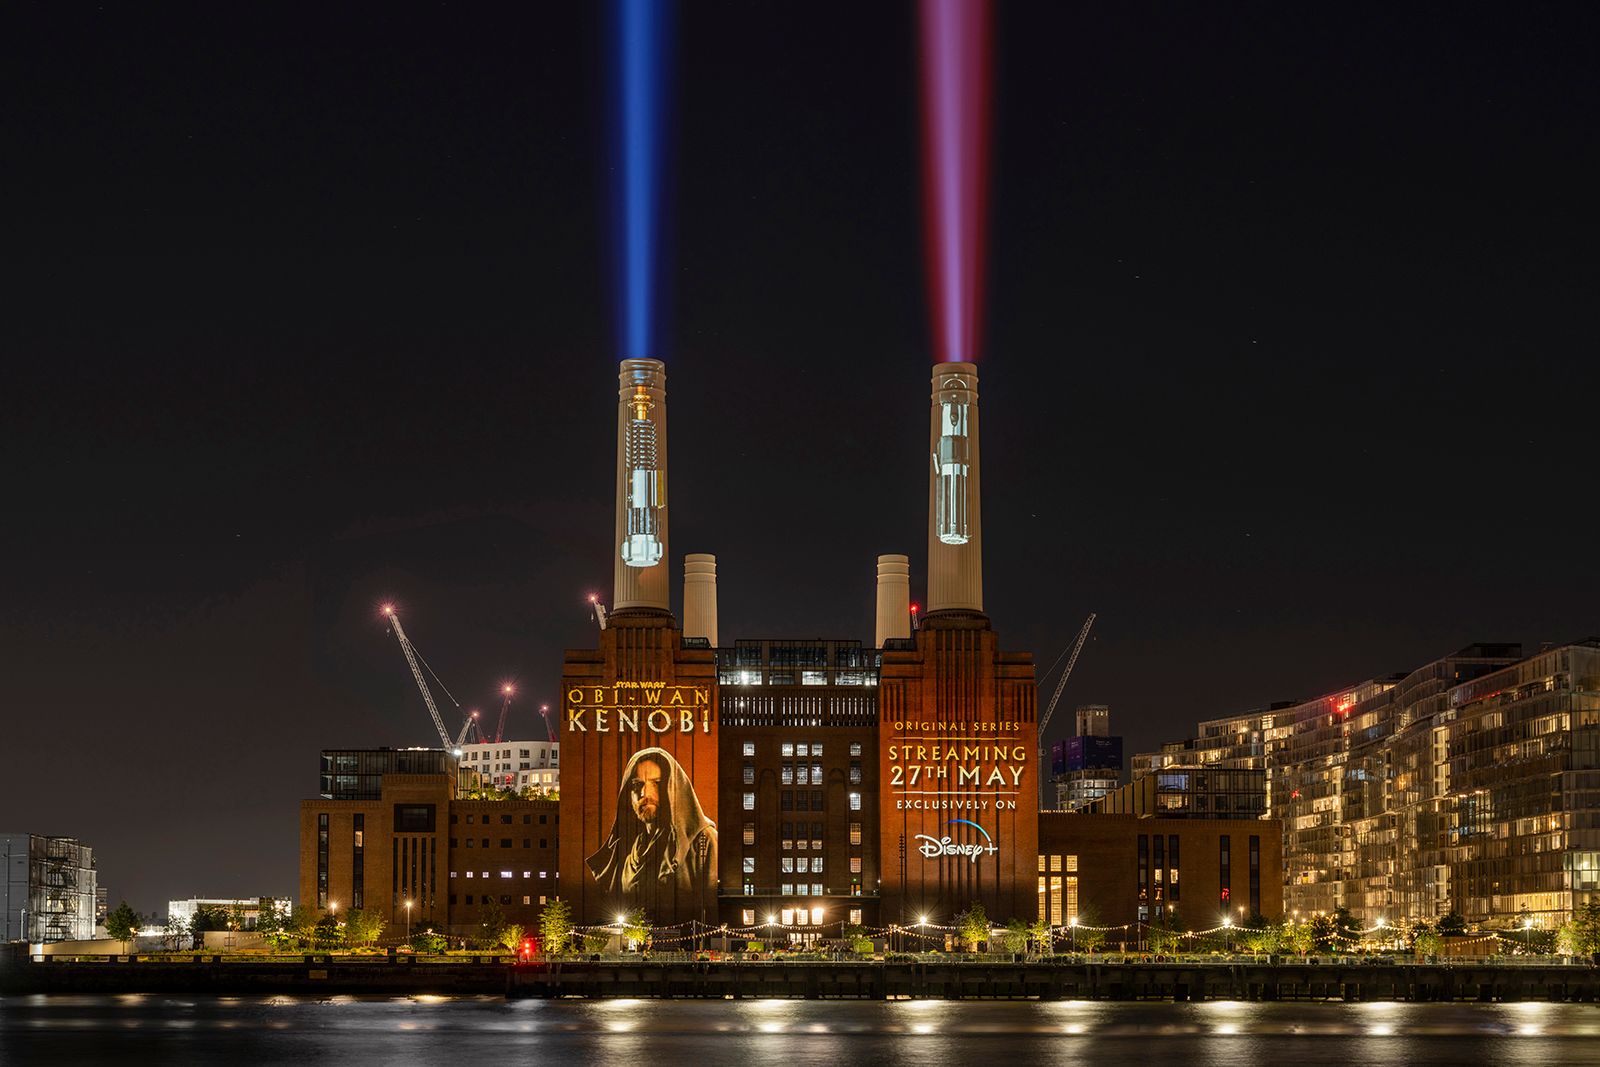 London's Battersea Power Station turned into lightsabers for Obi-Wan Kenobi launch photo 1